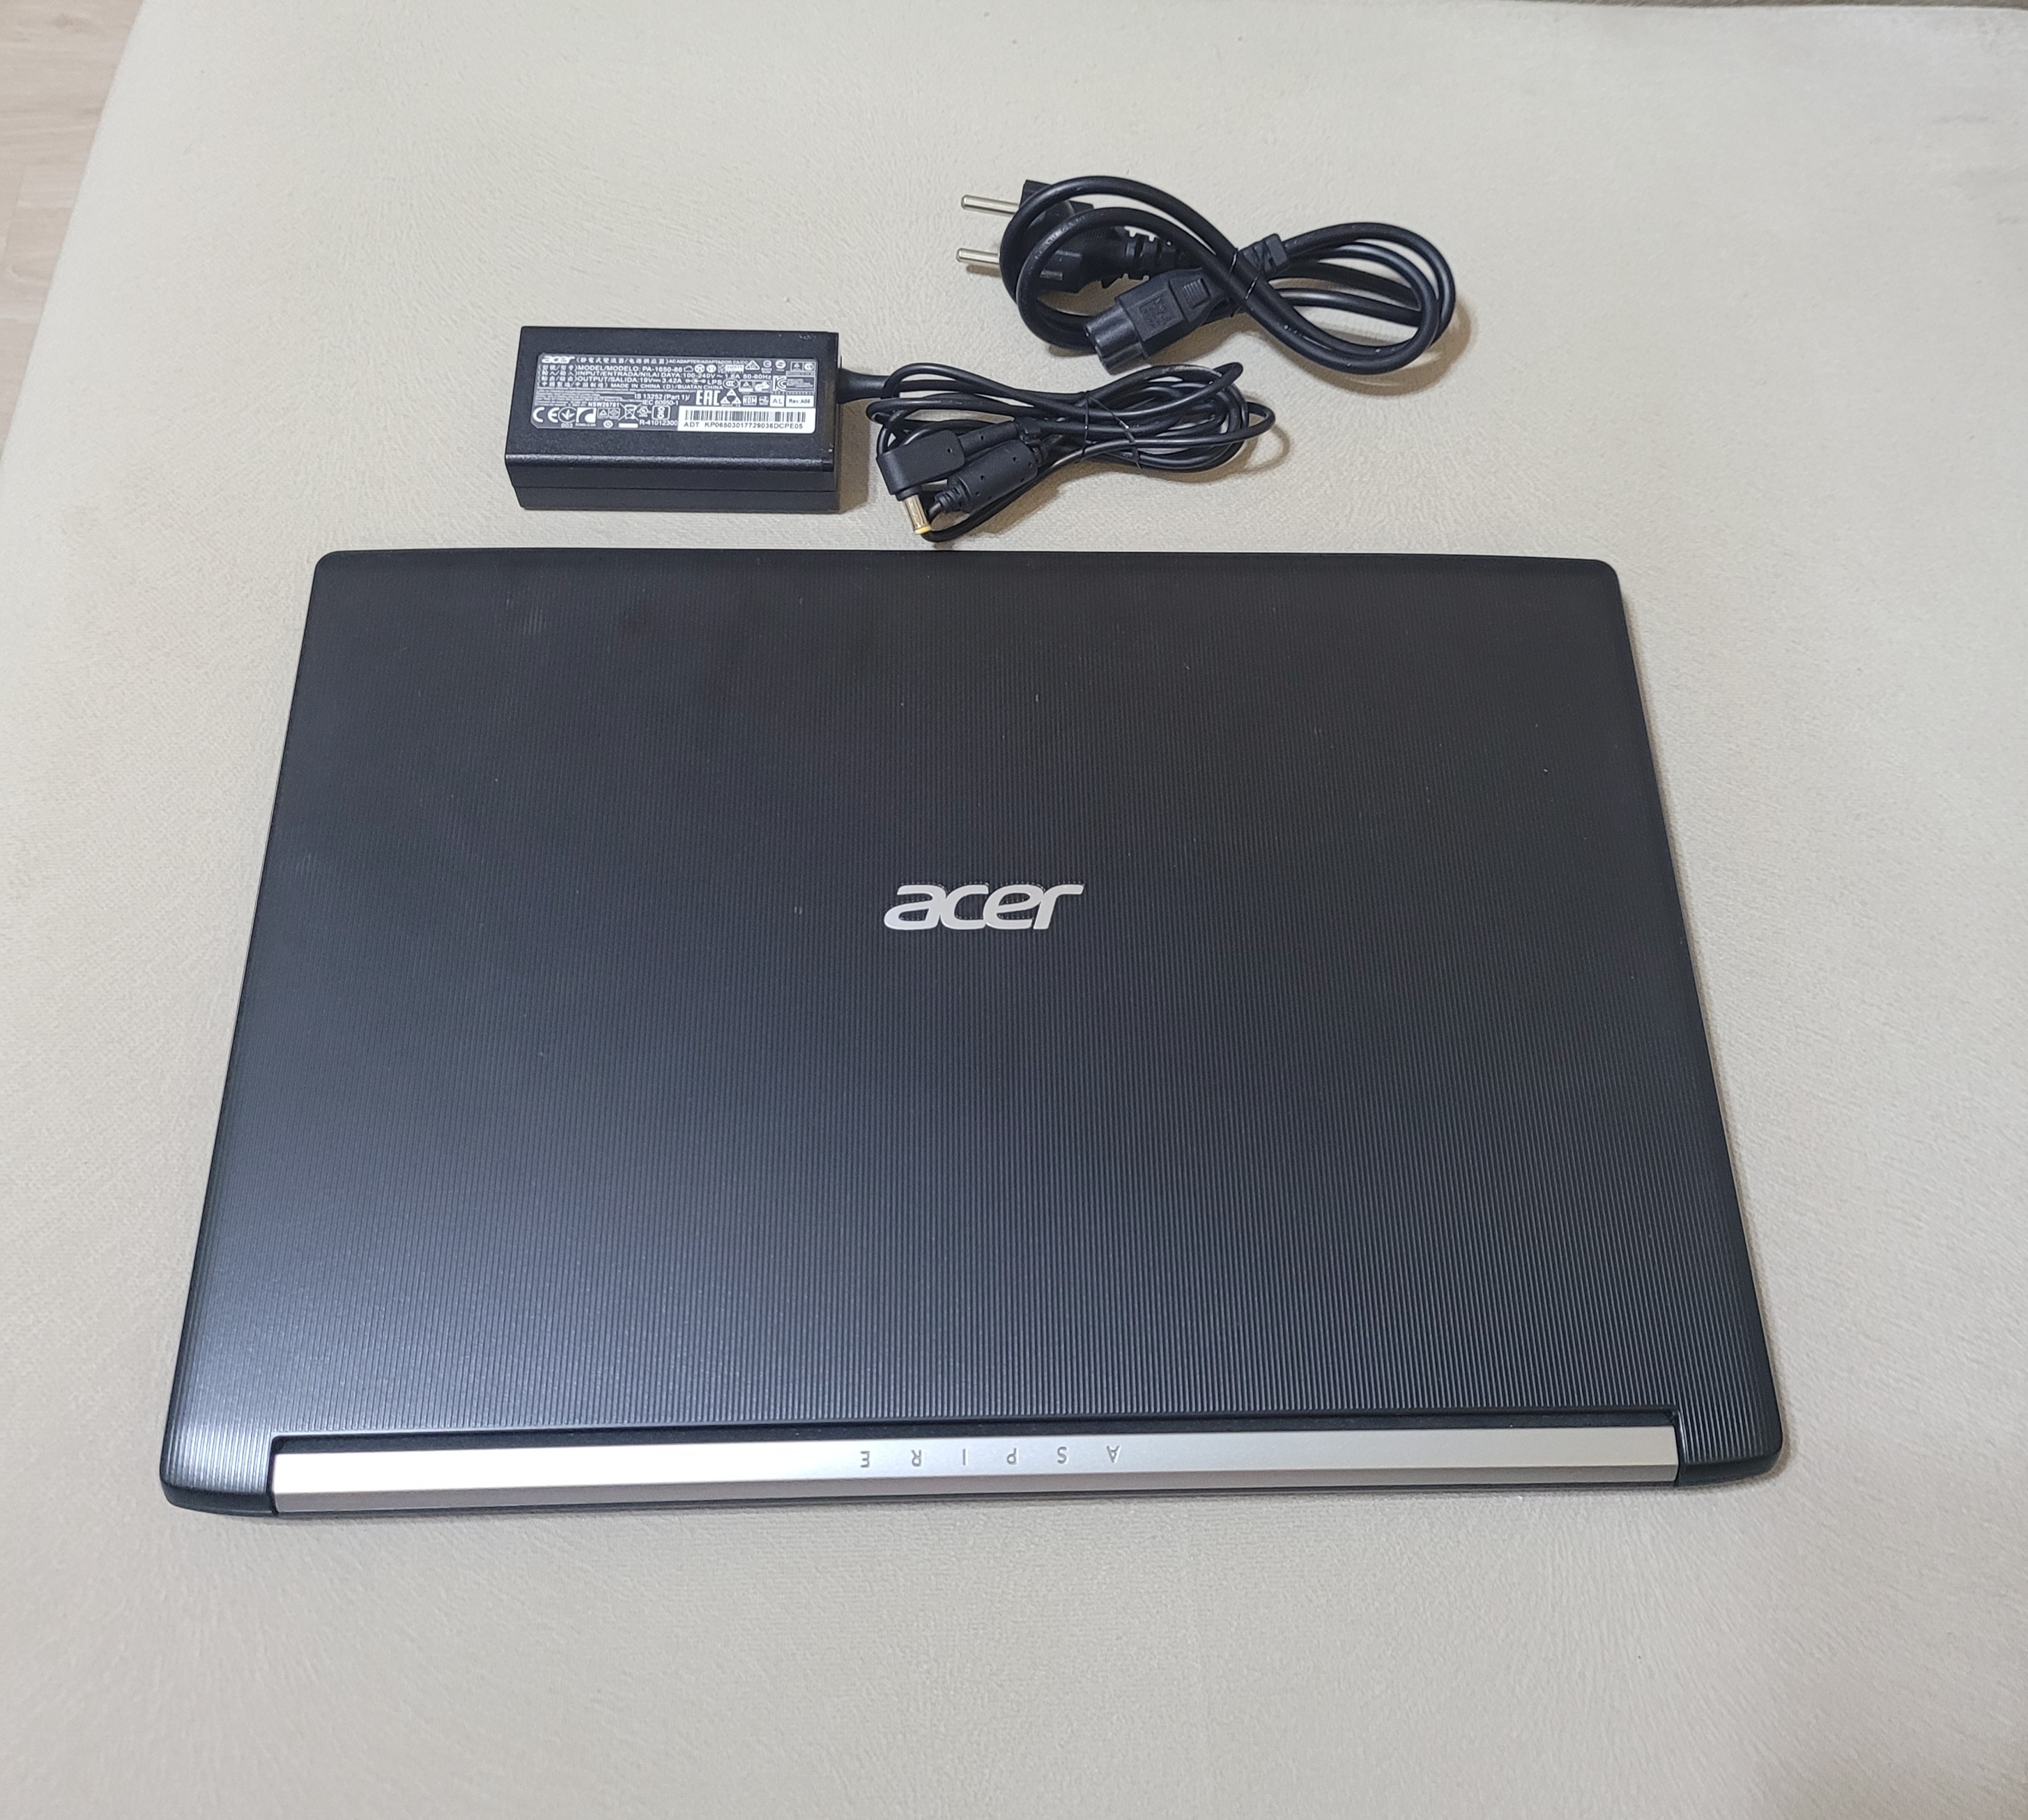 Acer Aspire A515-41G-T48Q Laptop, RX540 Ekran kartı, 512 SSD | DonanımHaber  Forum